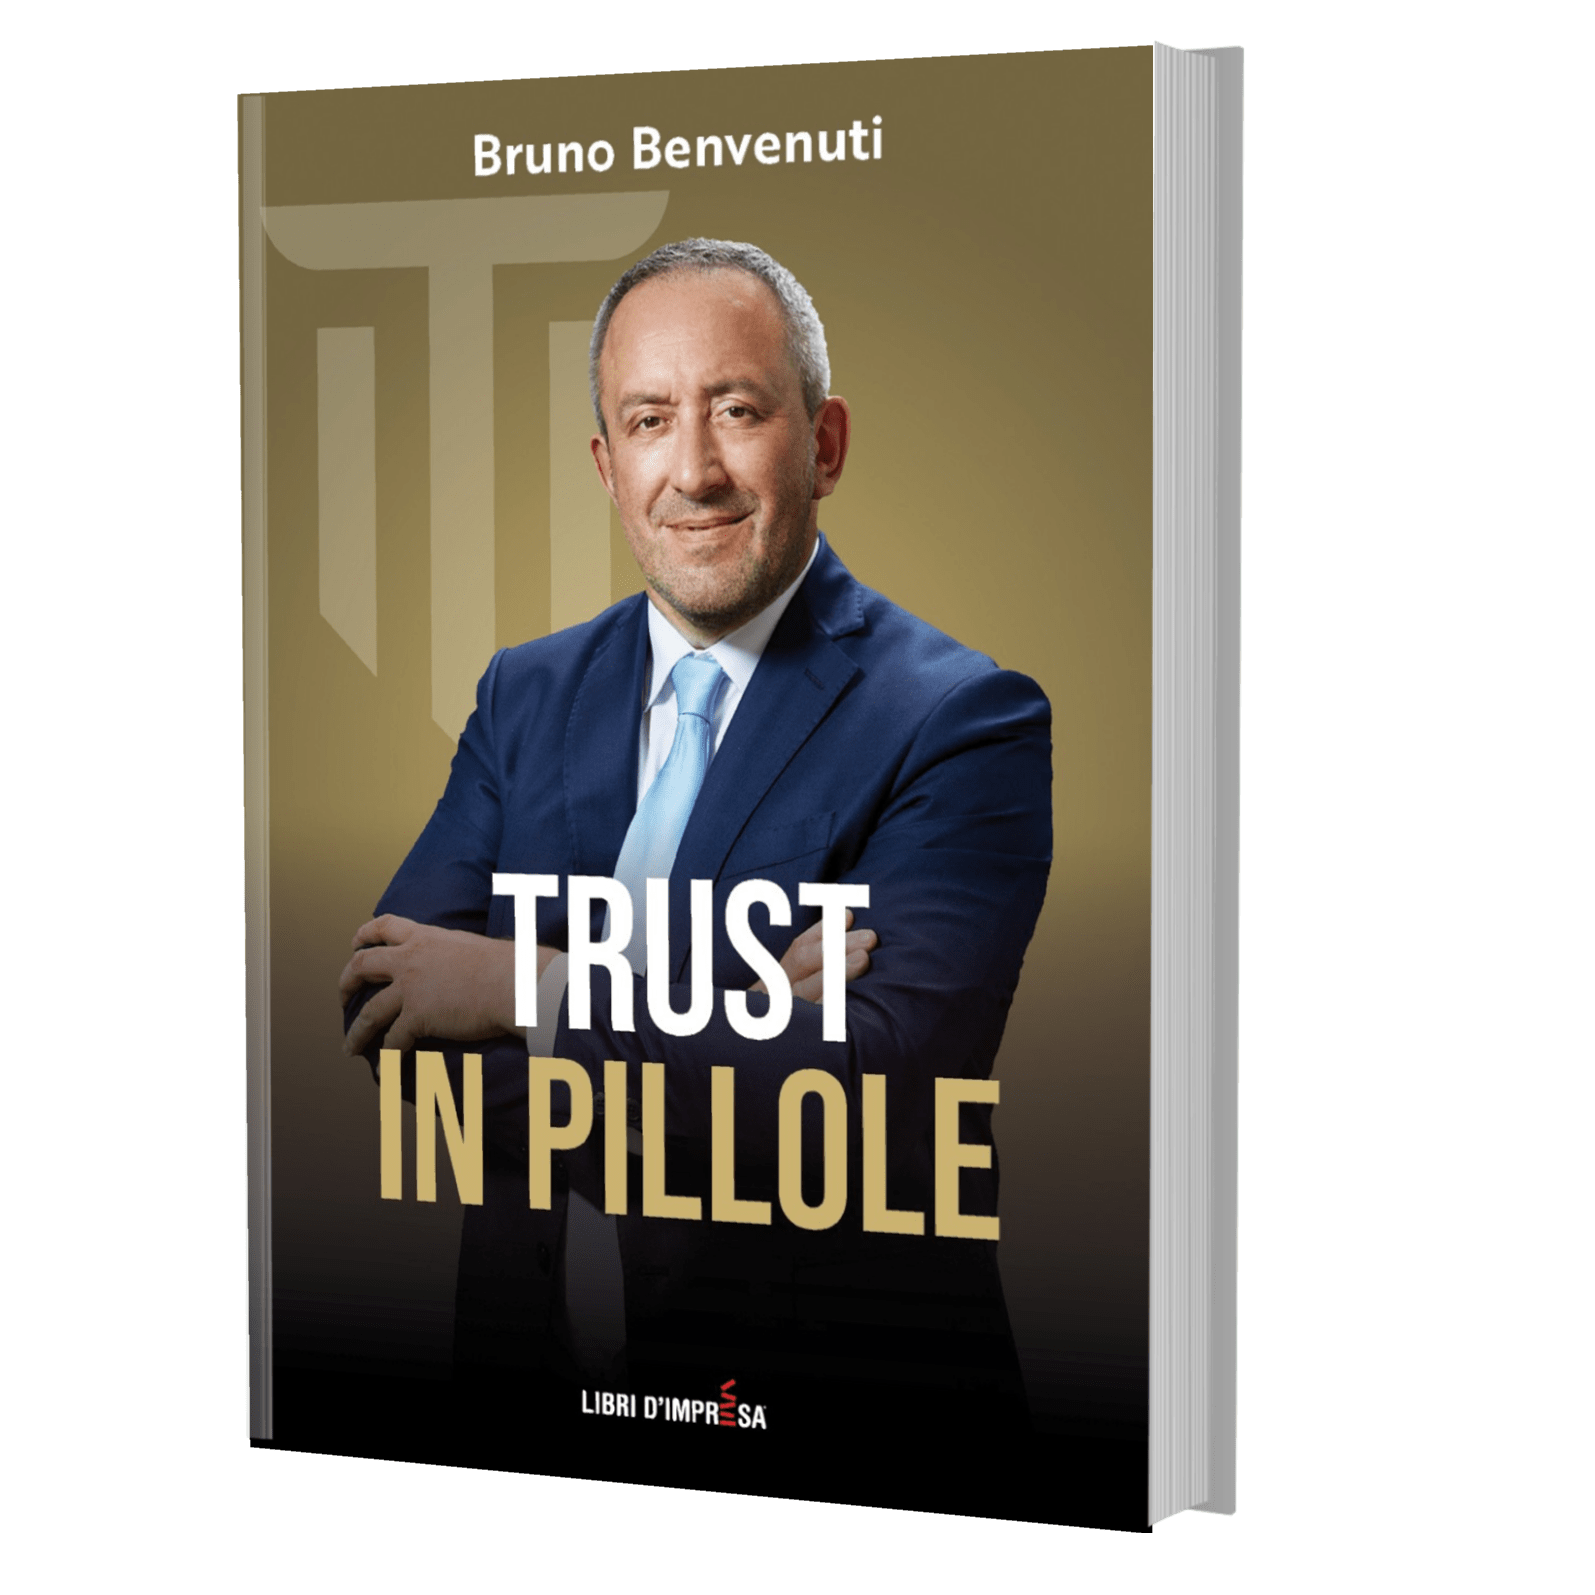 Bruno Benvenuti - Trust in pillole